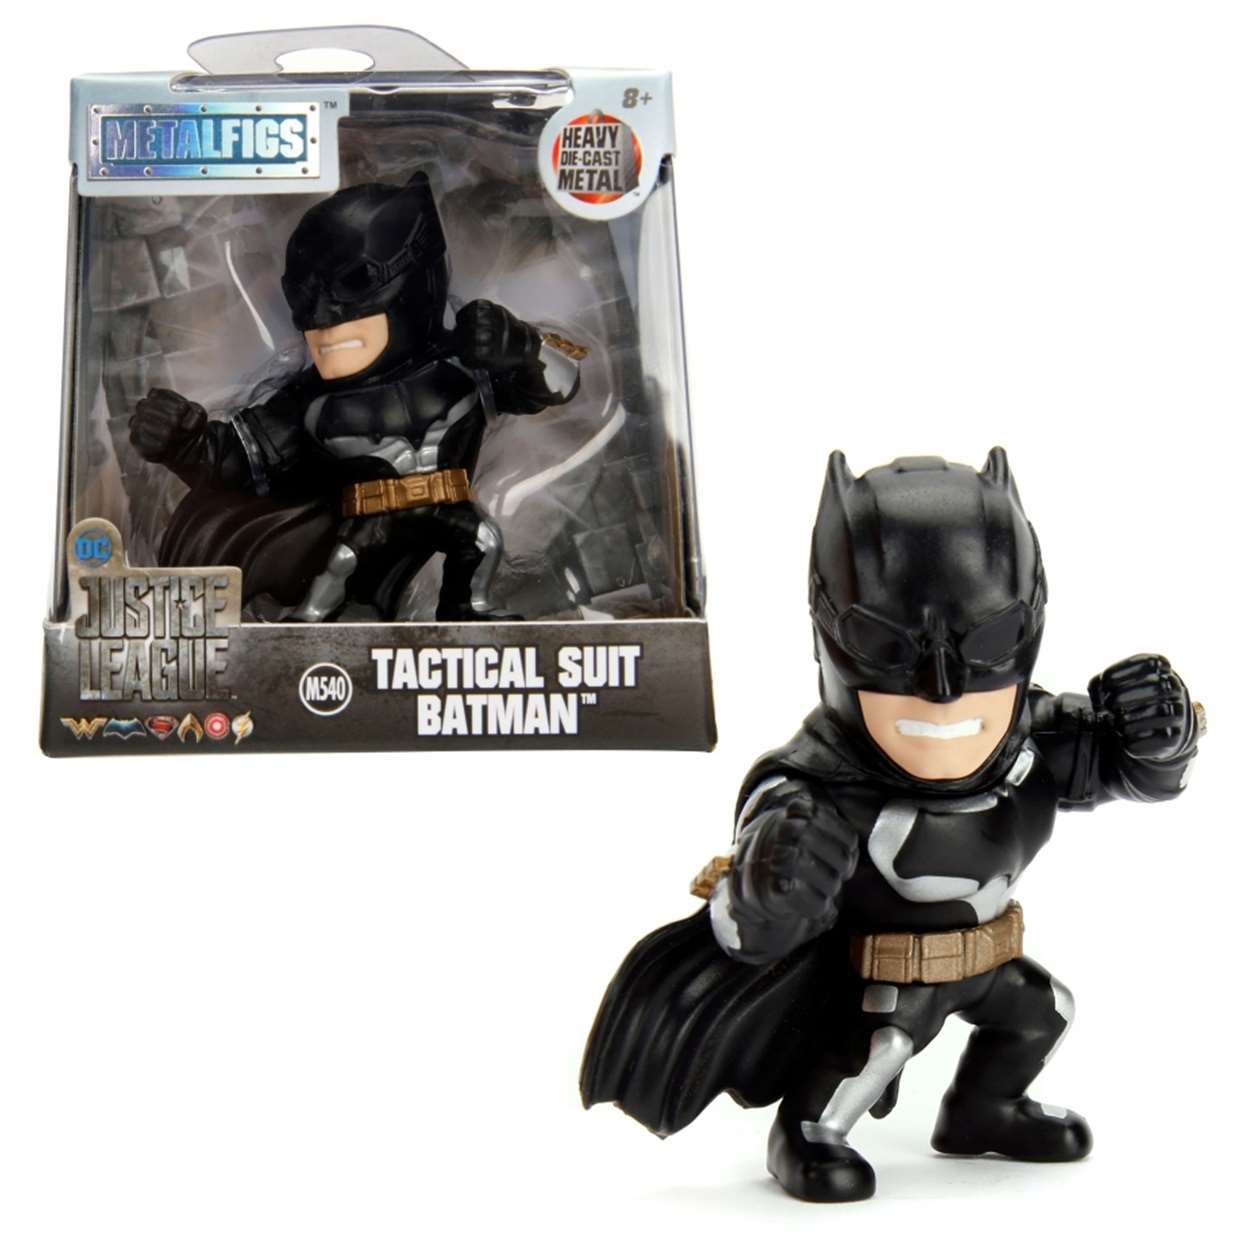 Batman M540 Tactical Suit Figura Justice League Metalfigs 